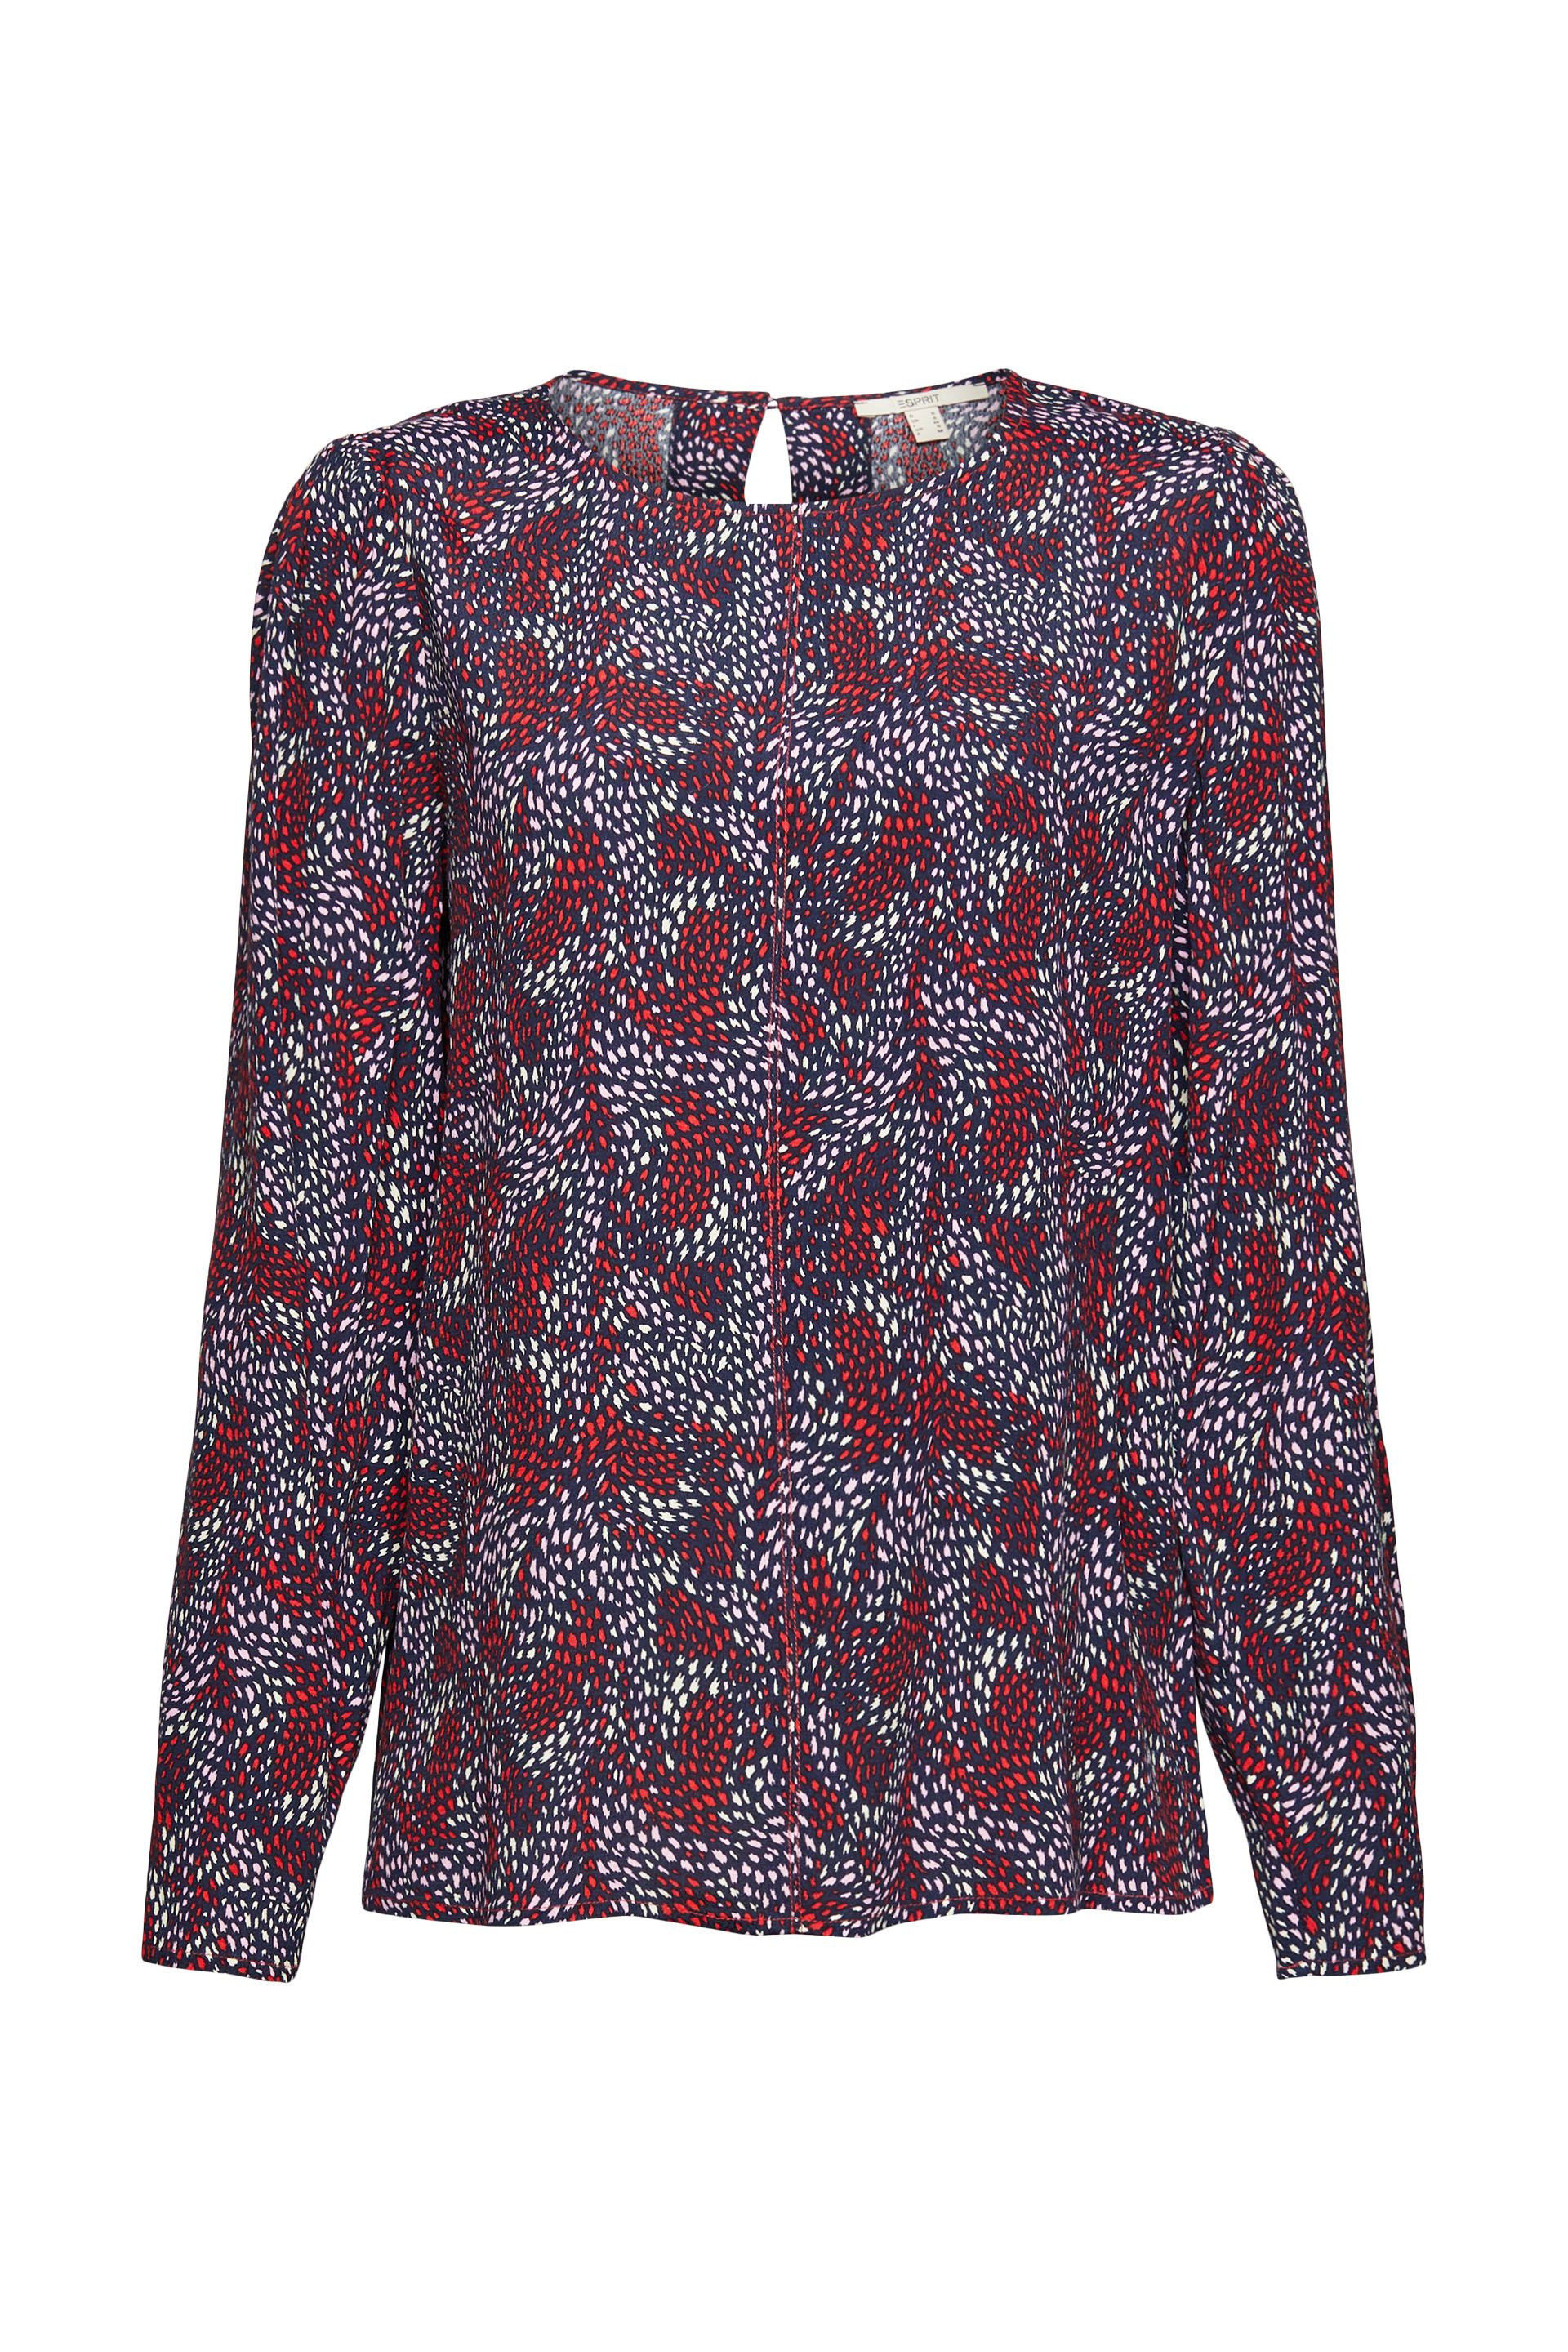 Viscose blouse, Multicolor, large image number 0